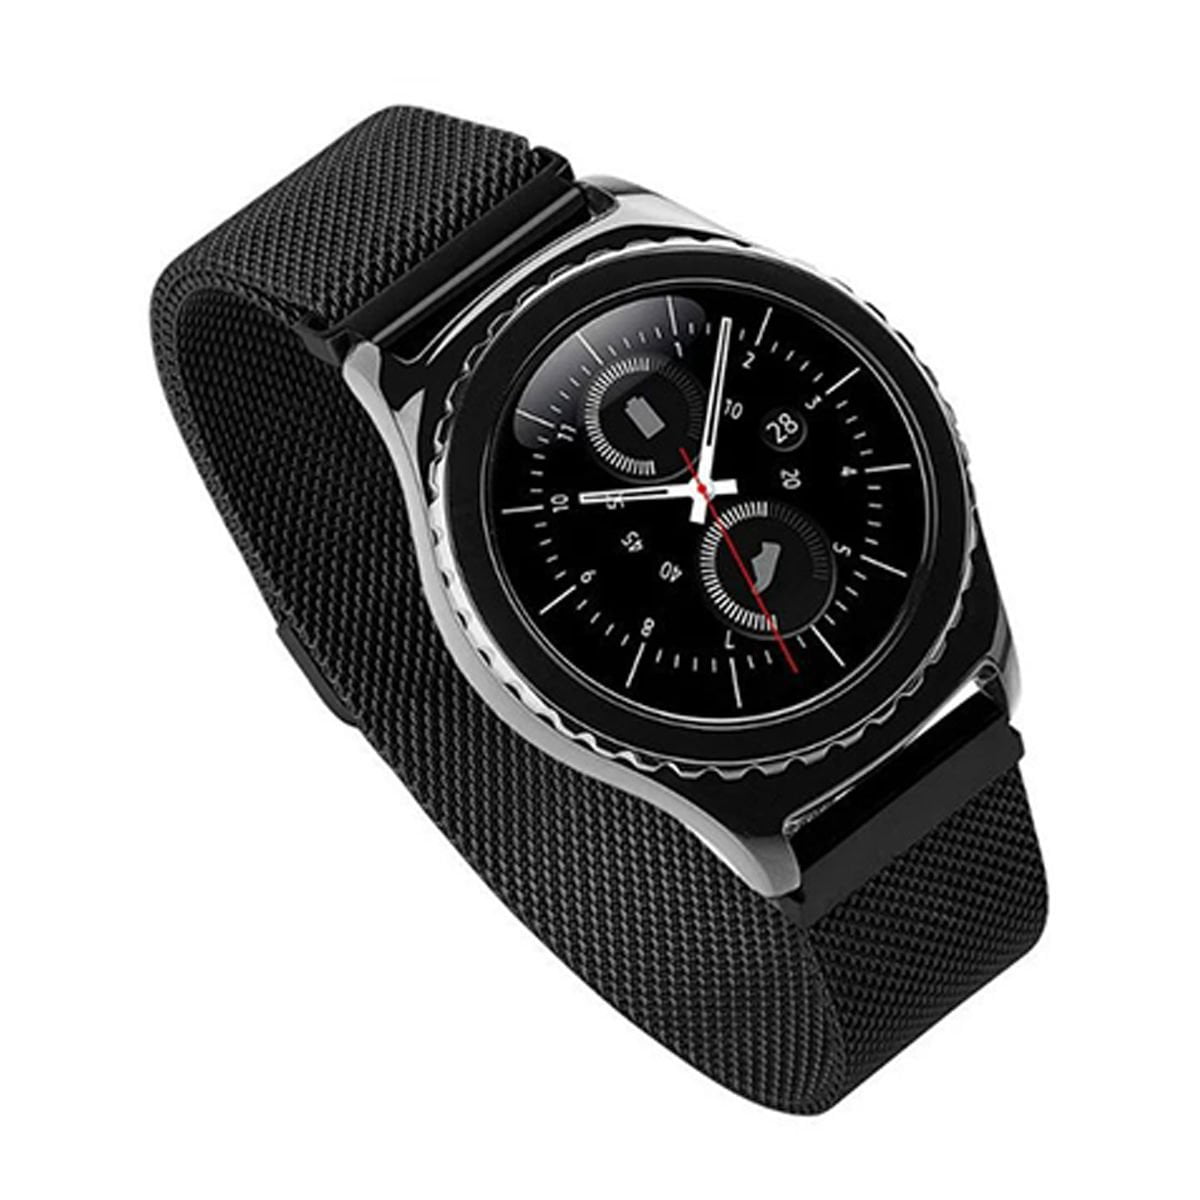 Samsung Gear S2 Classic Watch Strap Flash Sales, 58% OFF 